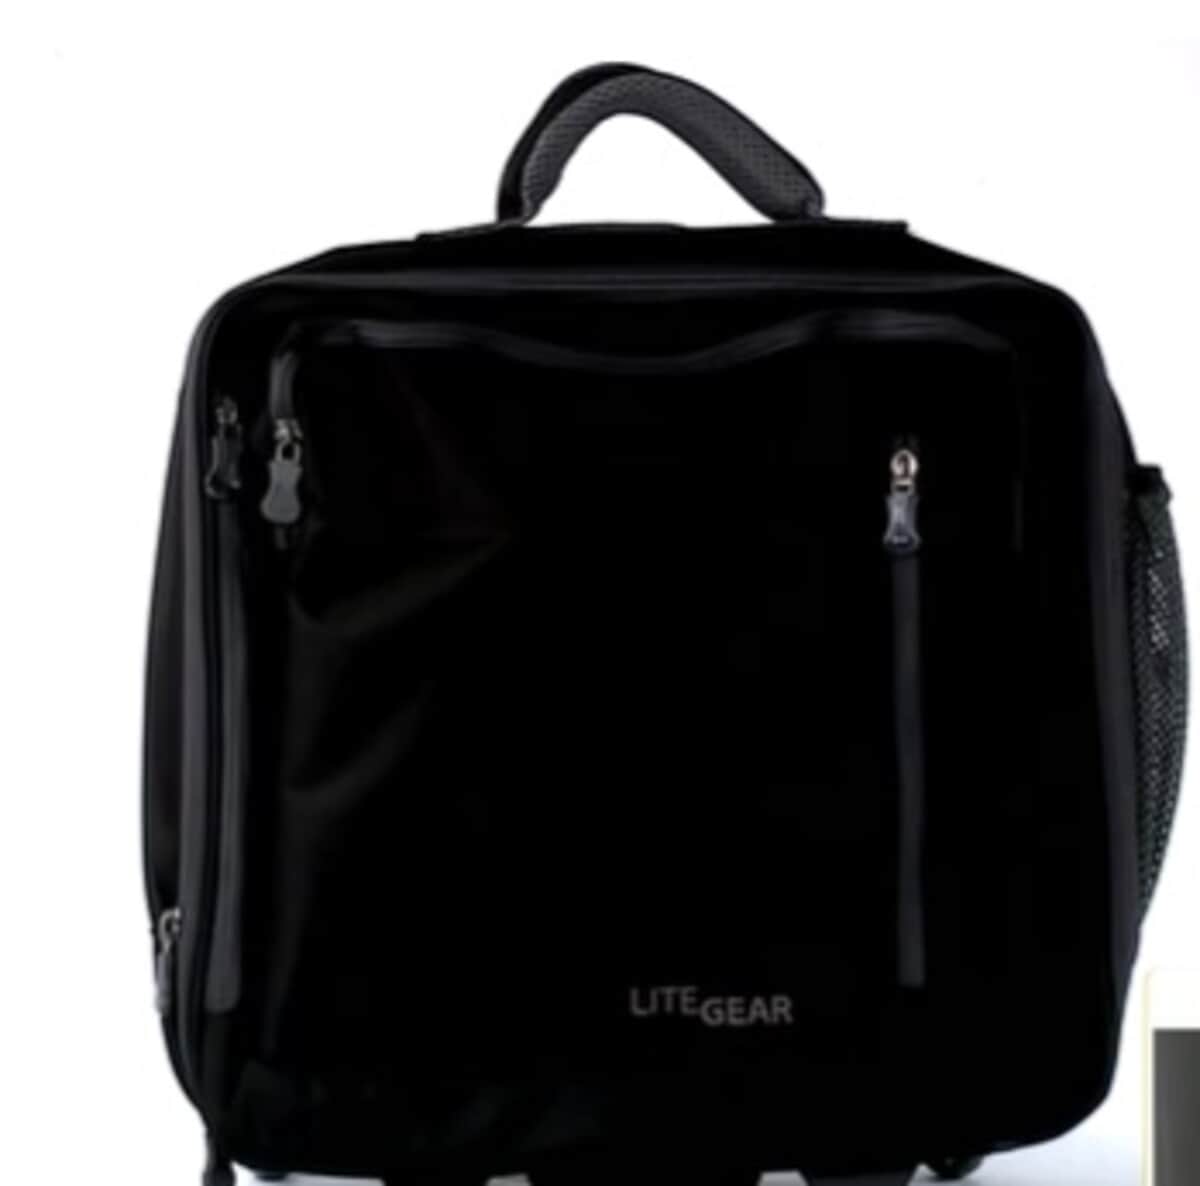 Lite Gear Hybrid Rolling Tote Luggage- Black image number 0